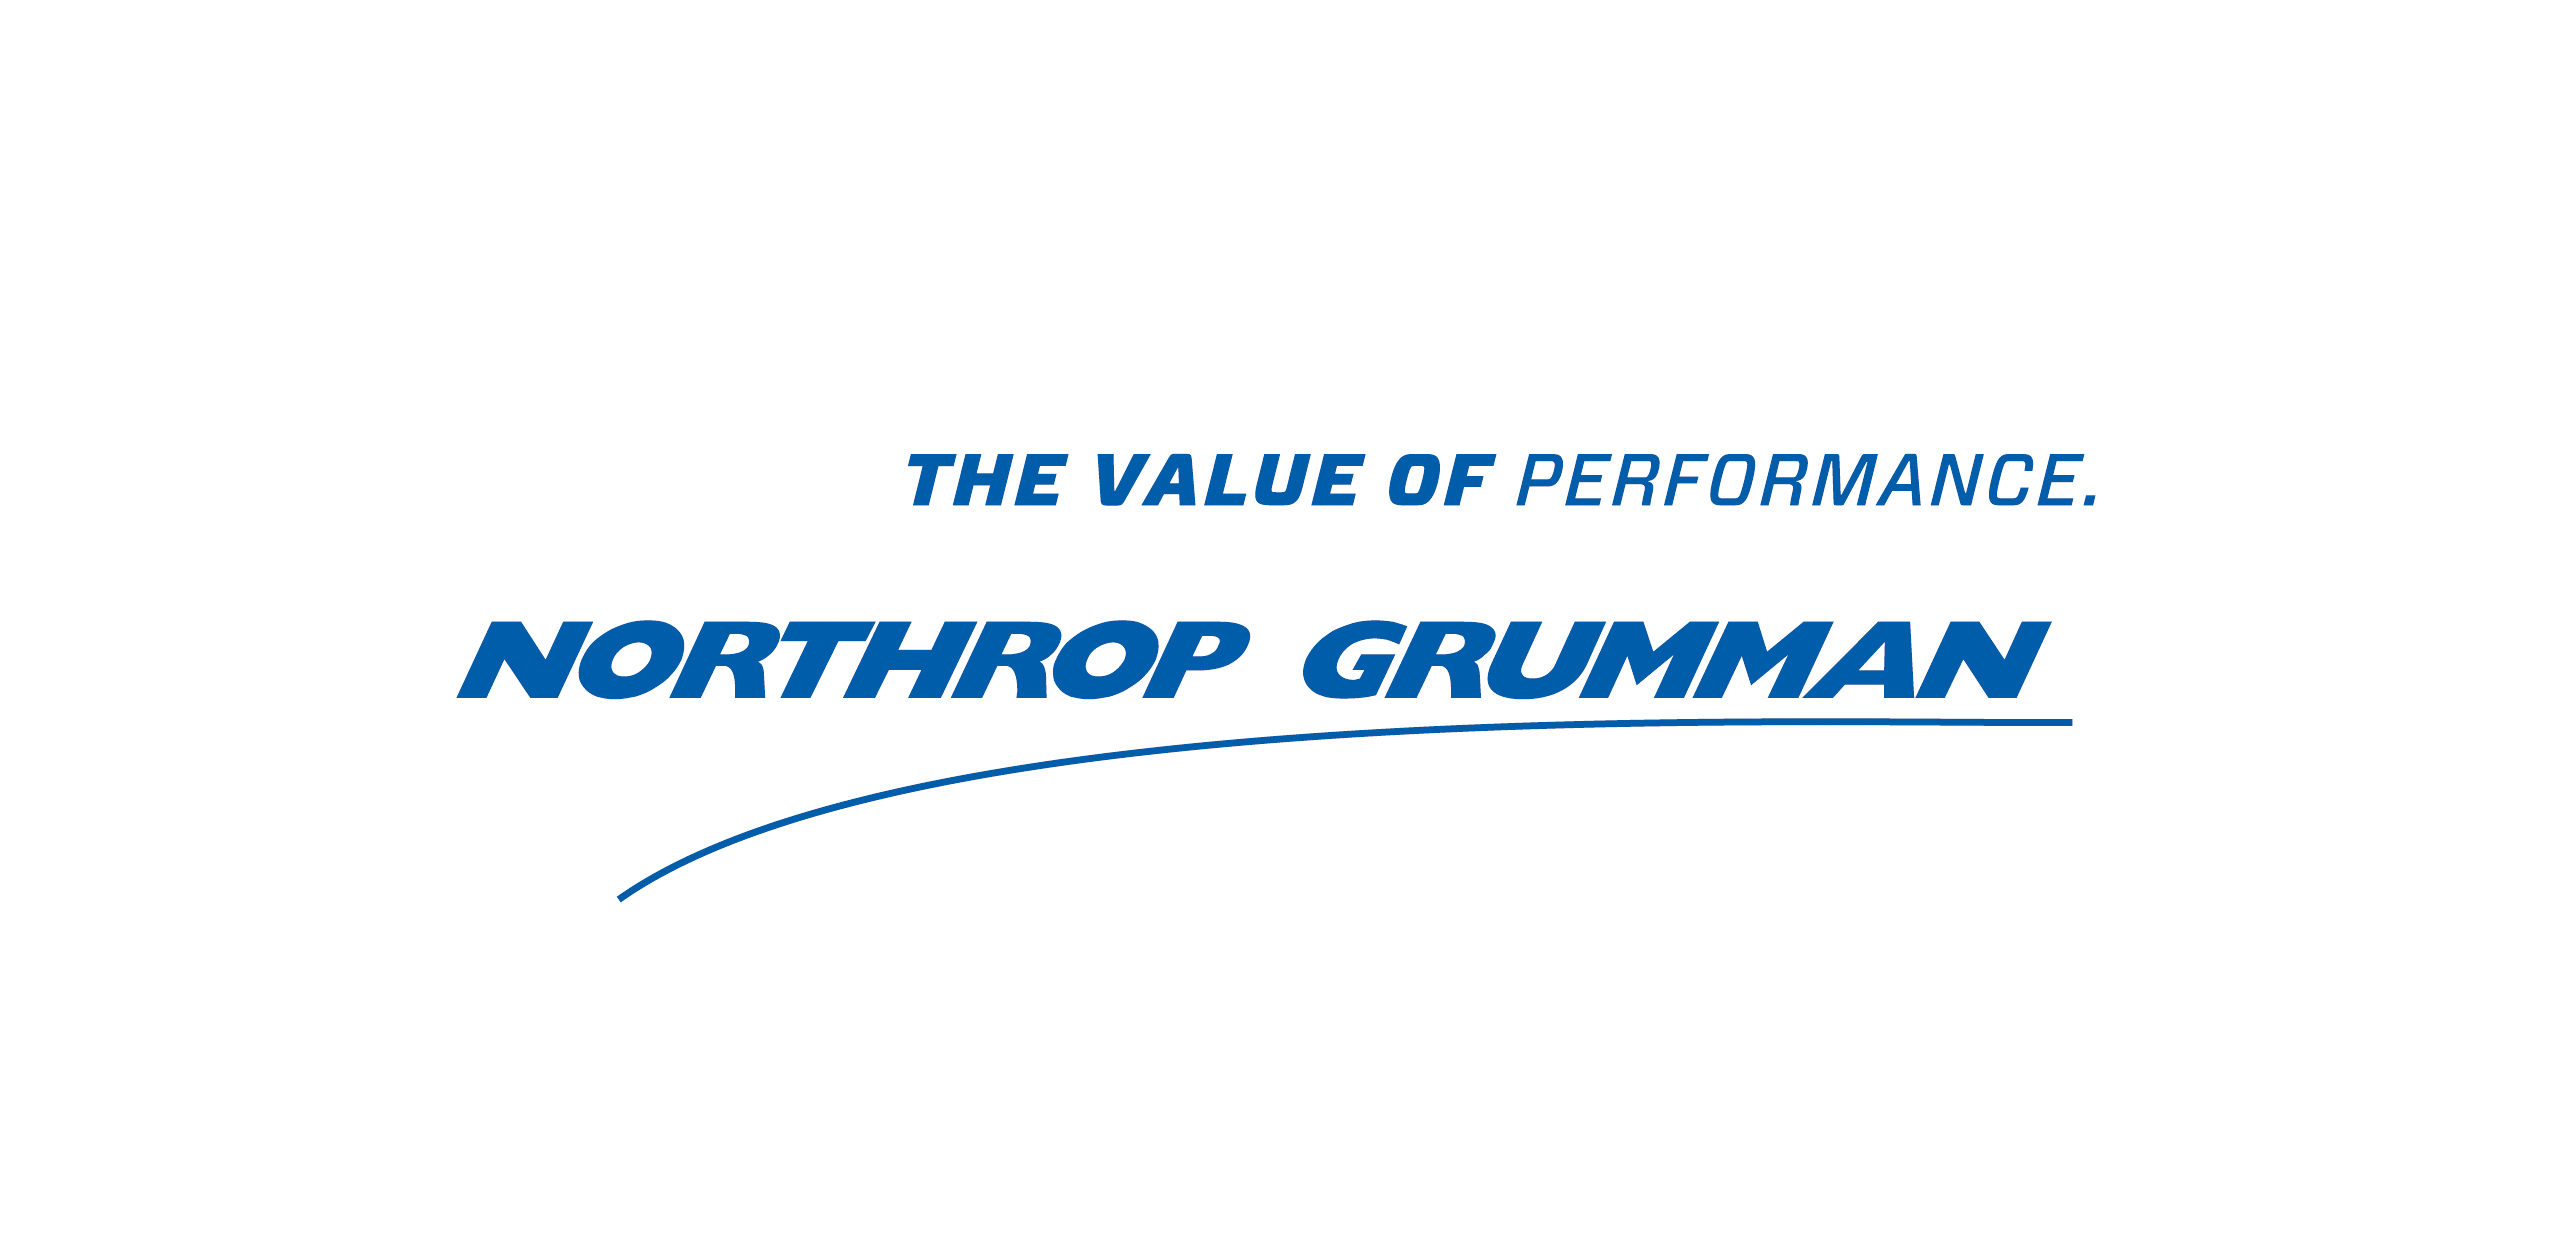 Northrop Grumman Company Logo